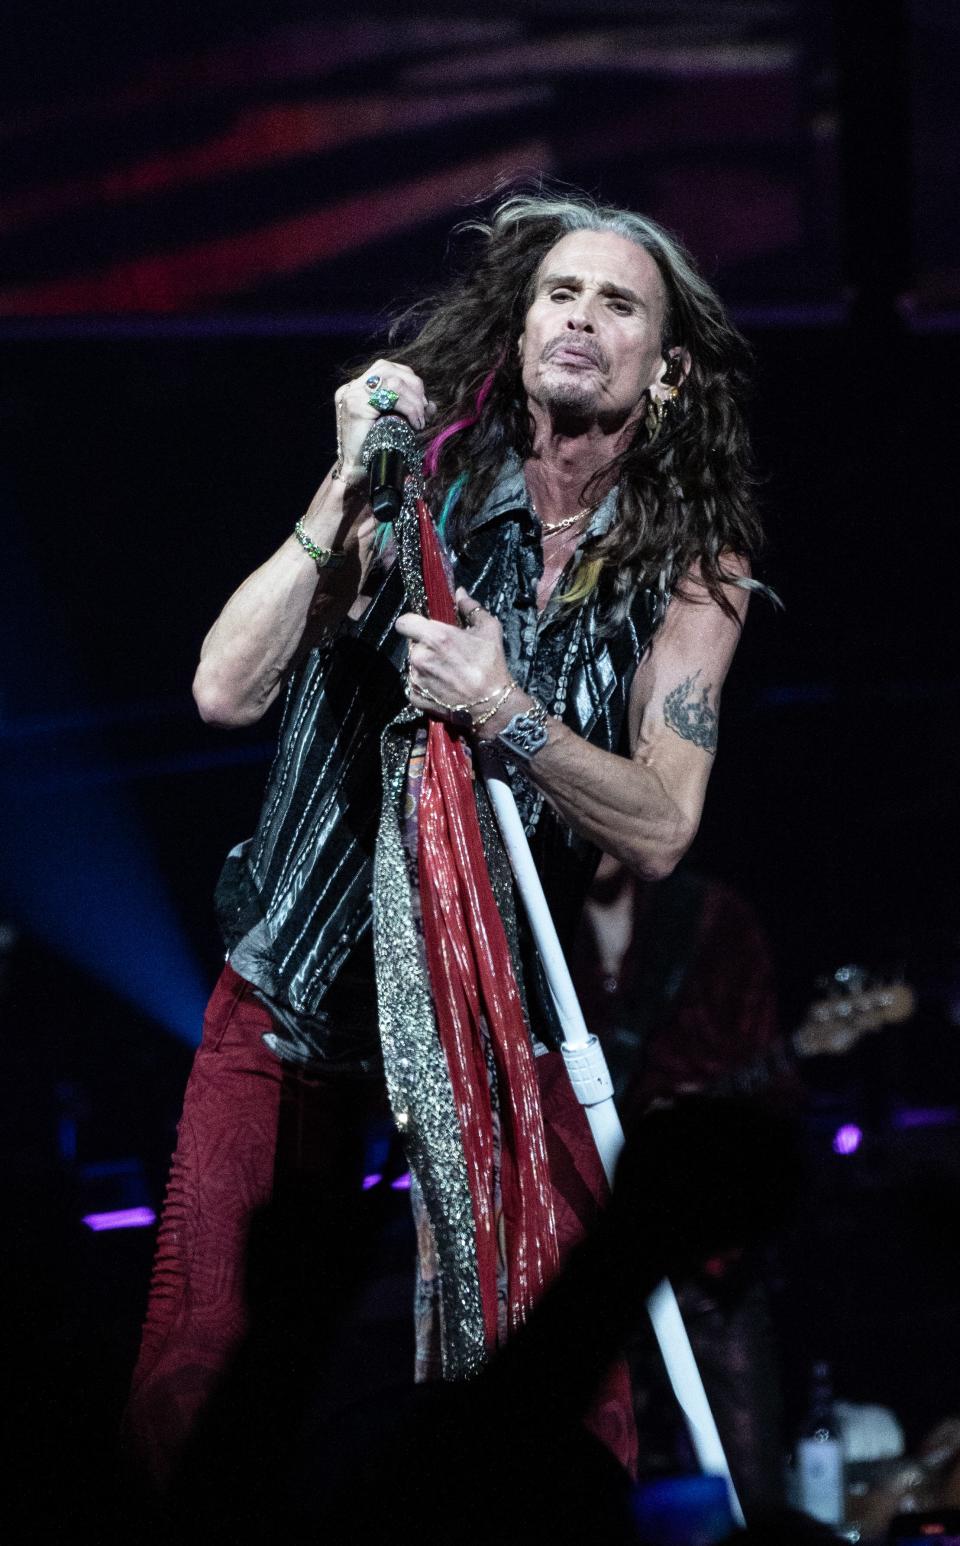 The postponed Aerosmith show was originally scheduled for Jan. 4.